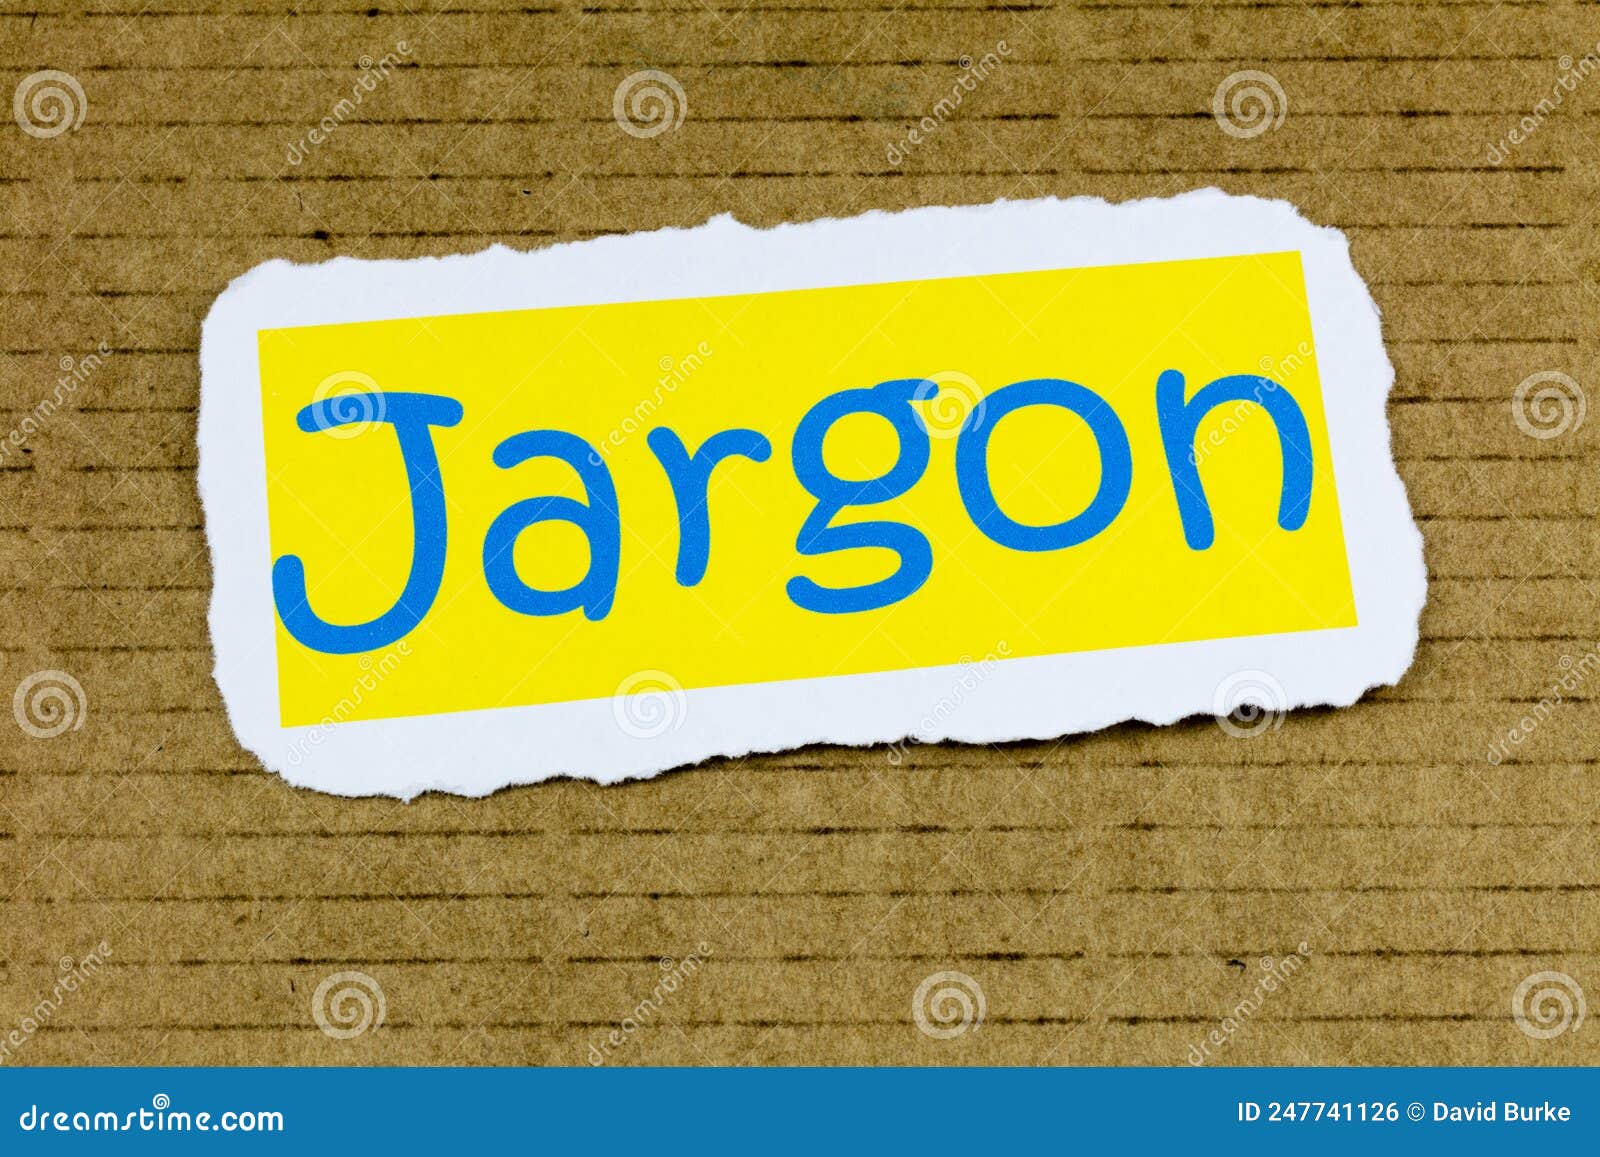 jargon word communication slang dictionary lingo terminology